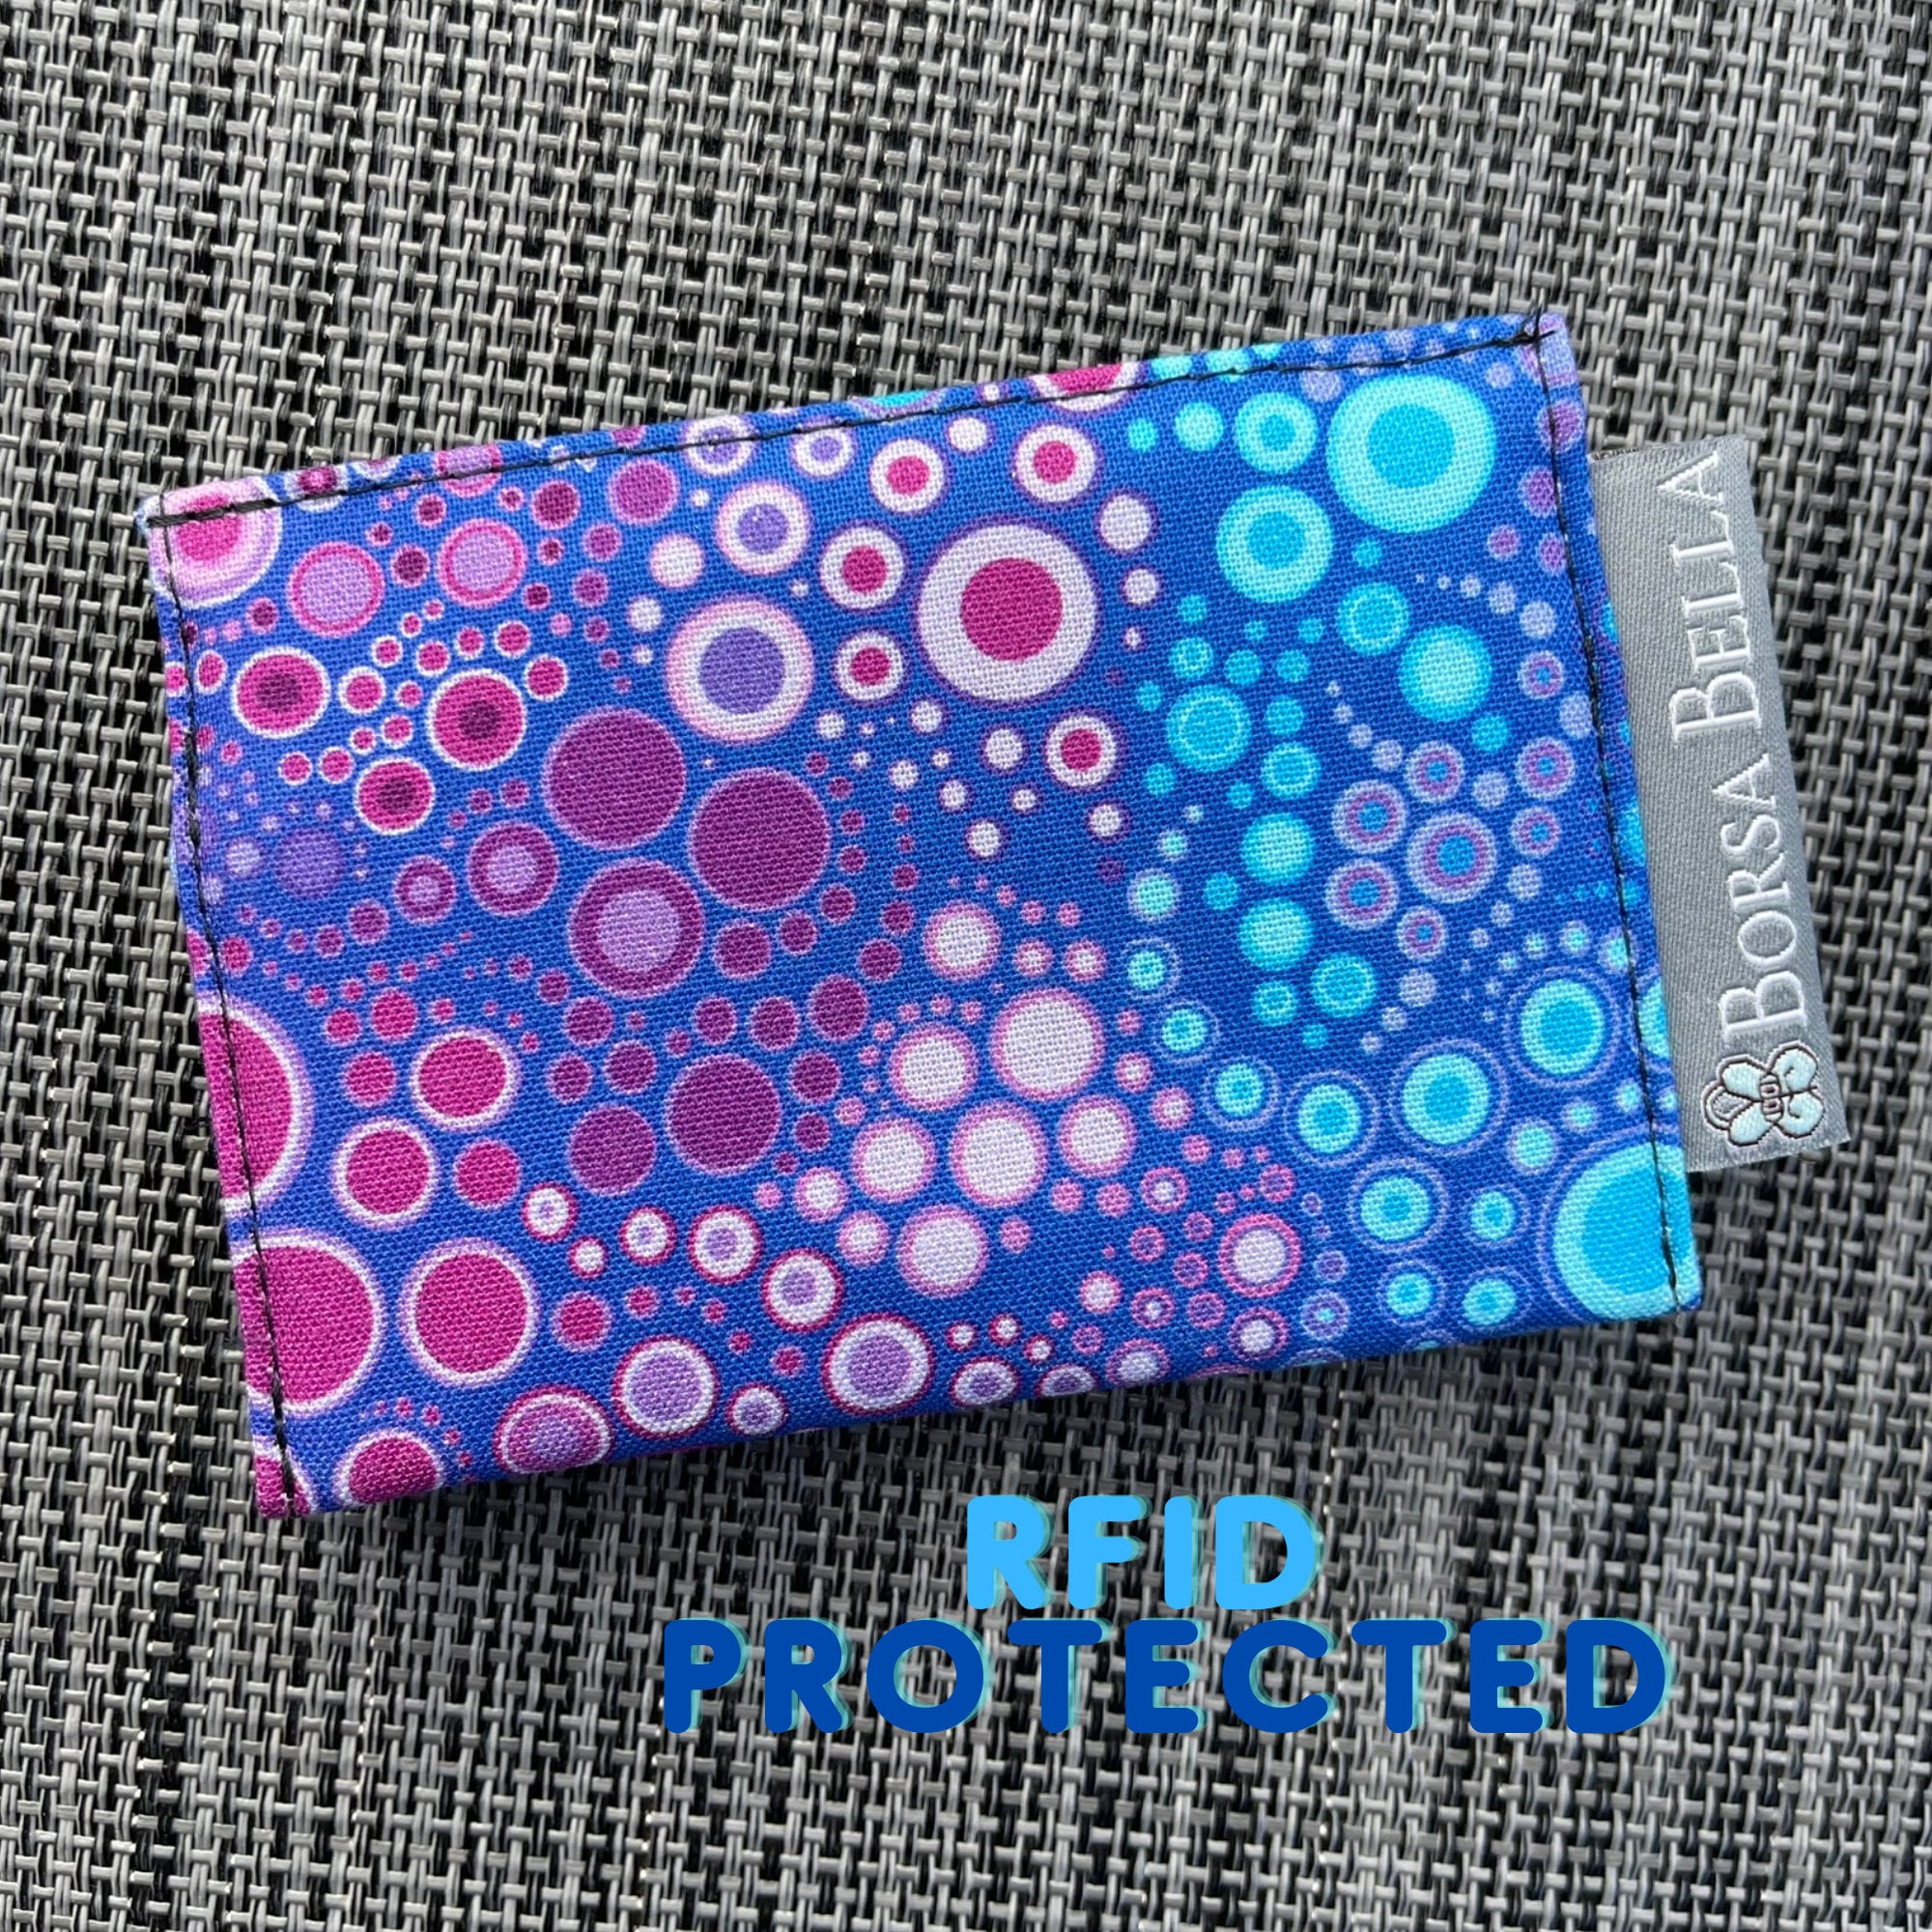 Card Holder RFID Protected - Black Beauty Fabric – Borsa Bella